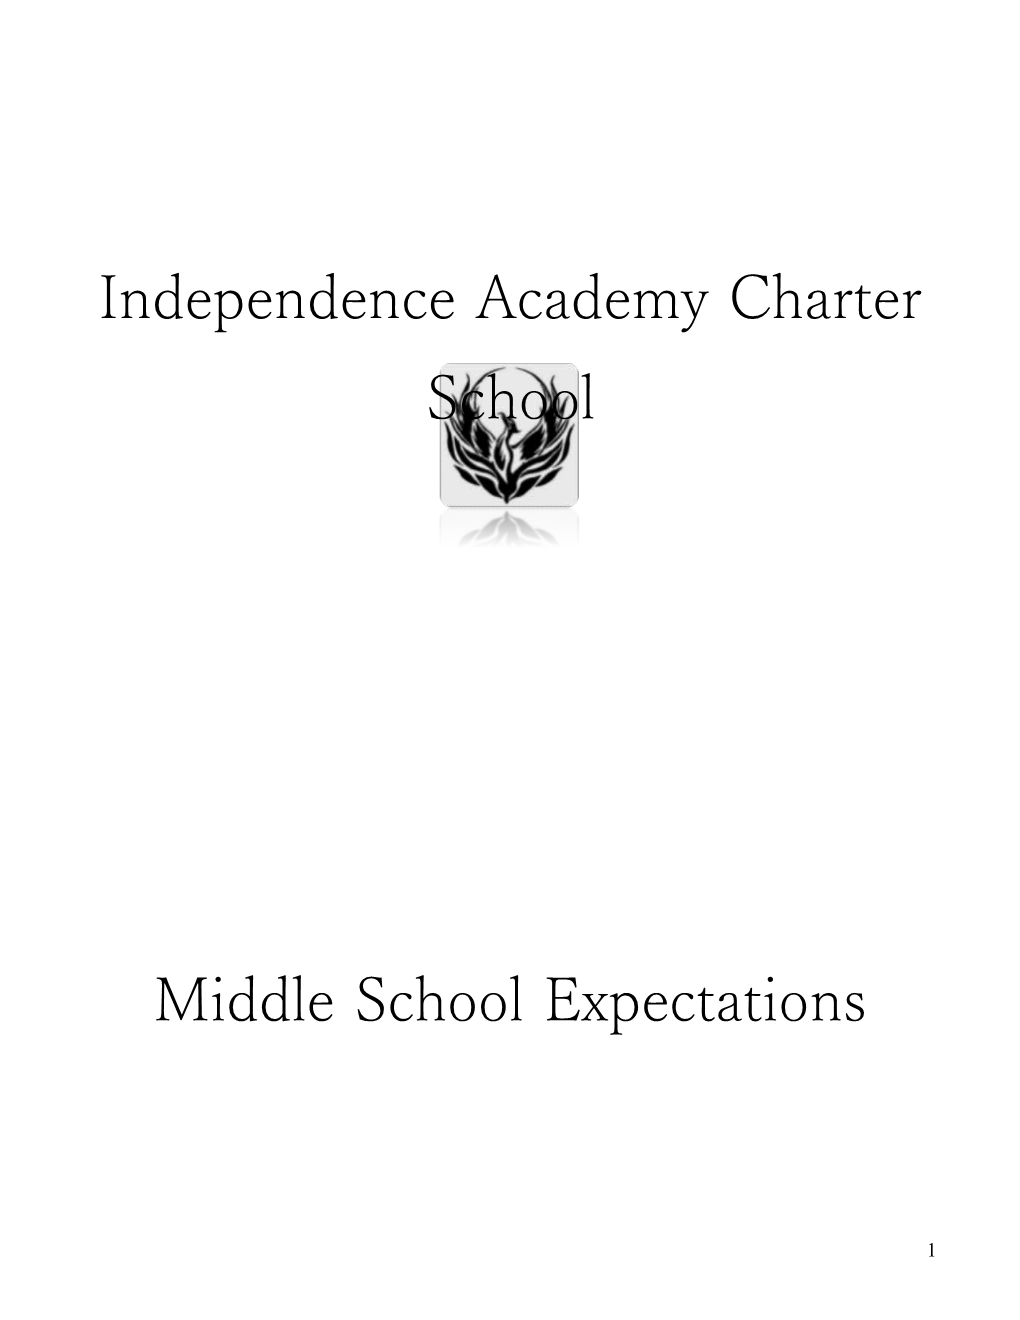 Independence Academy Charter School